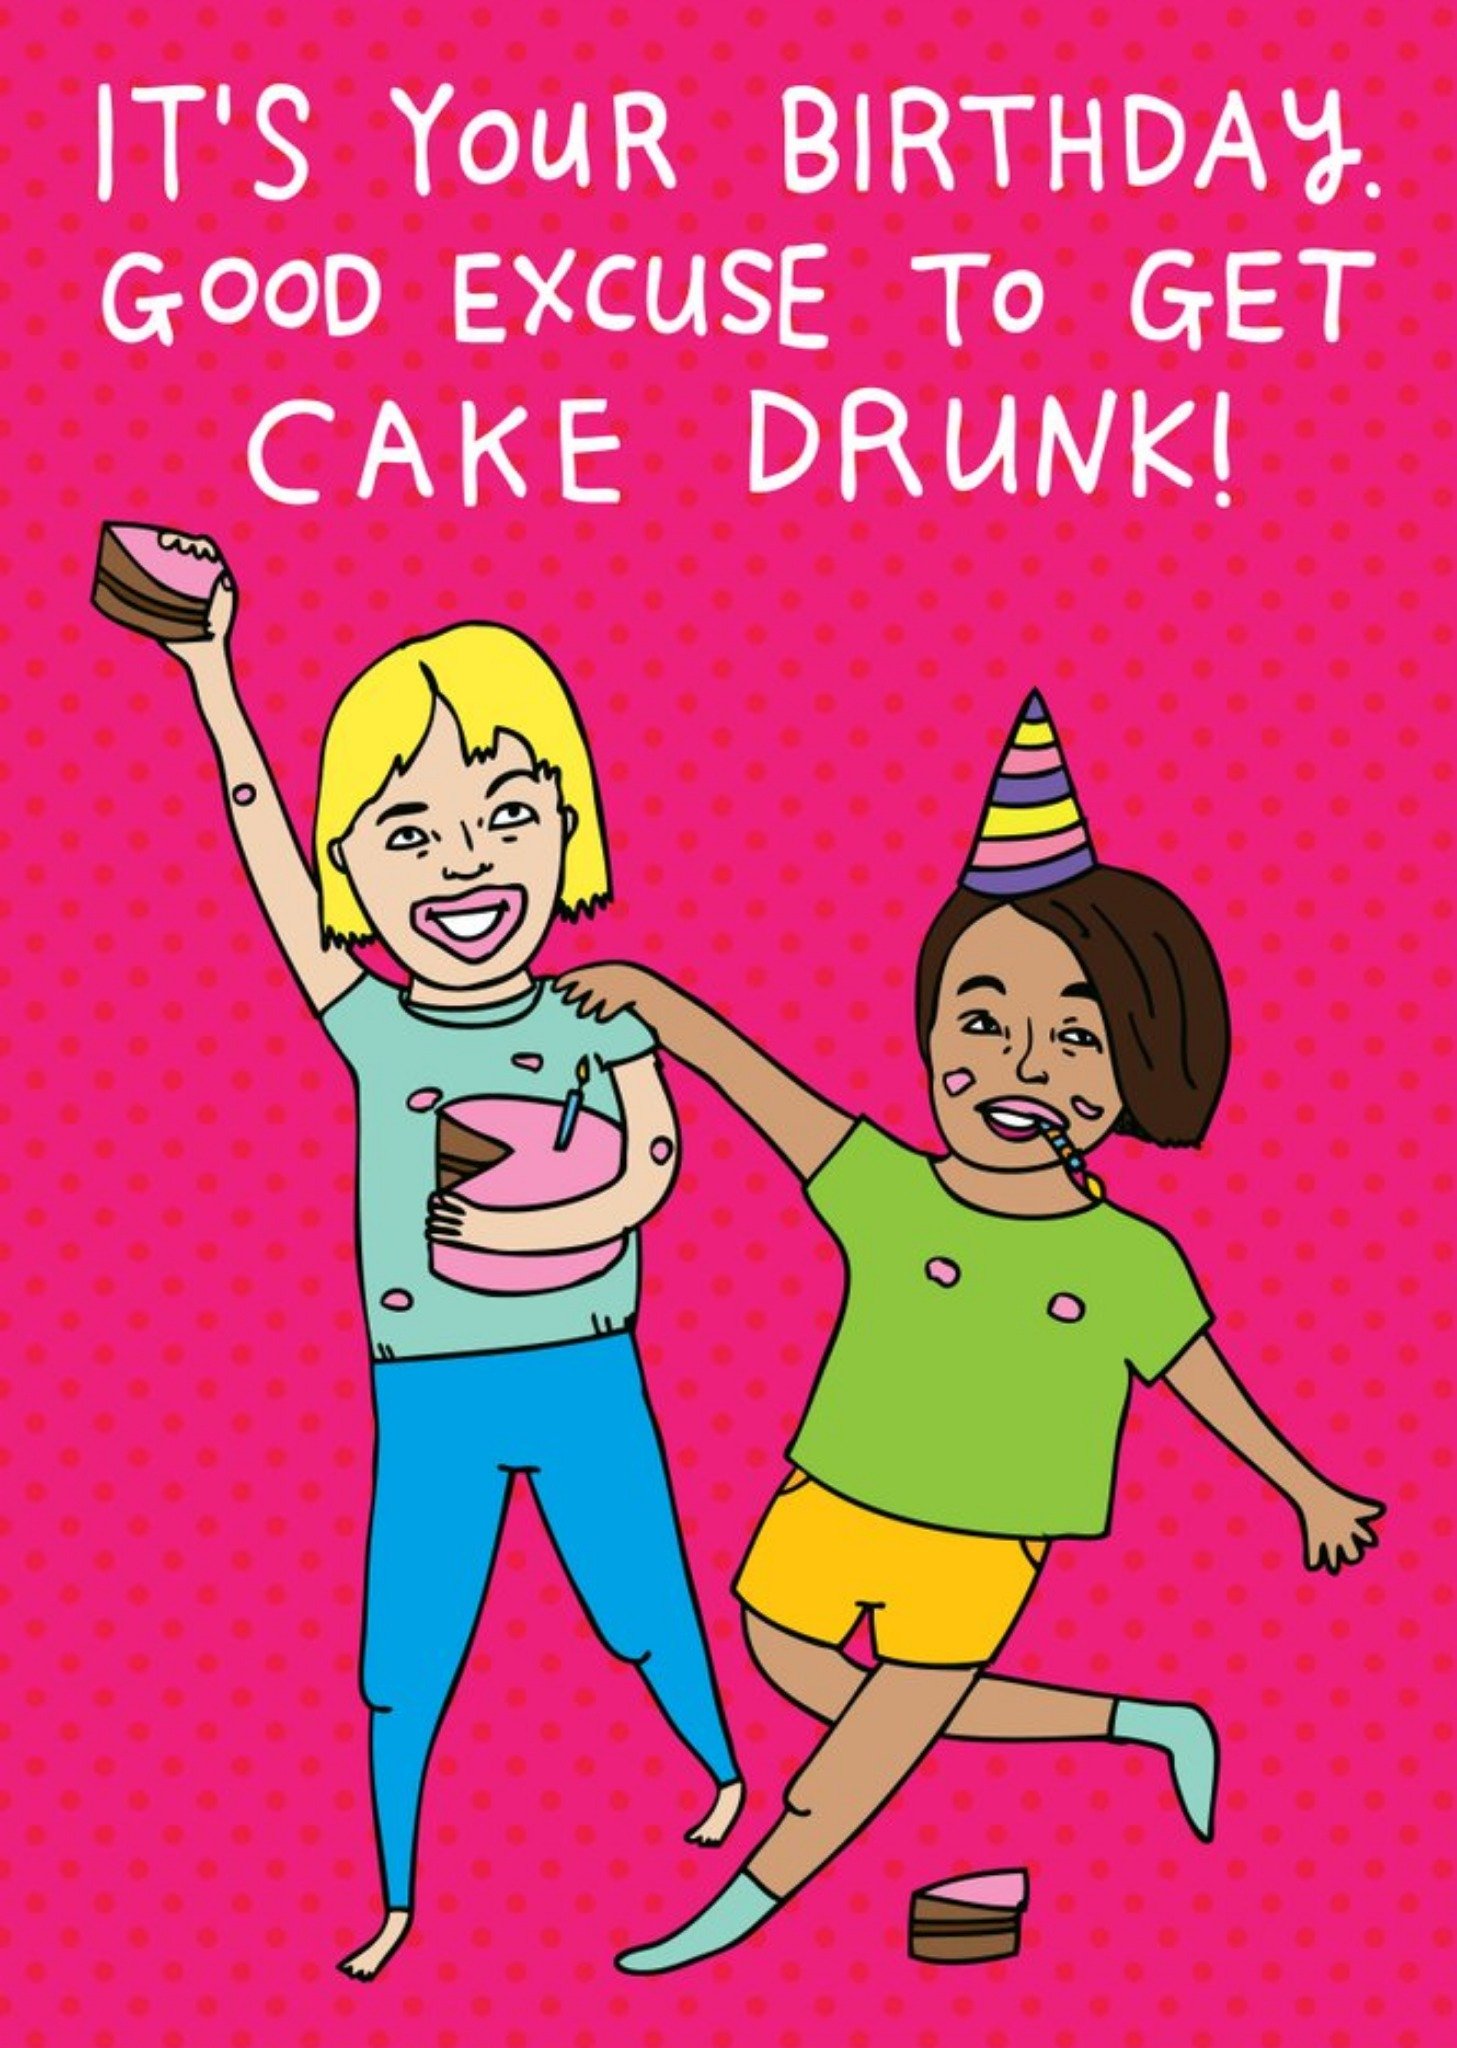 Moonpig Fun Illustration Of People Getting Cake Drunk Birthday Card Ecard